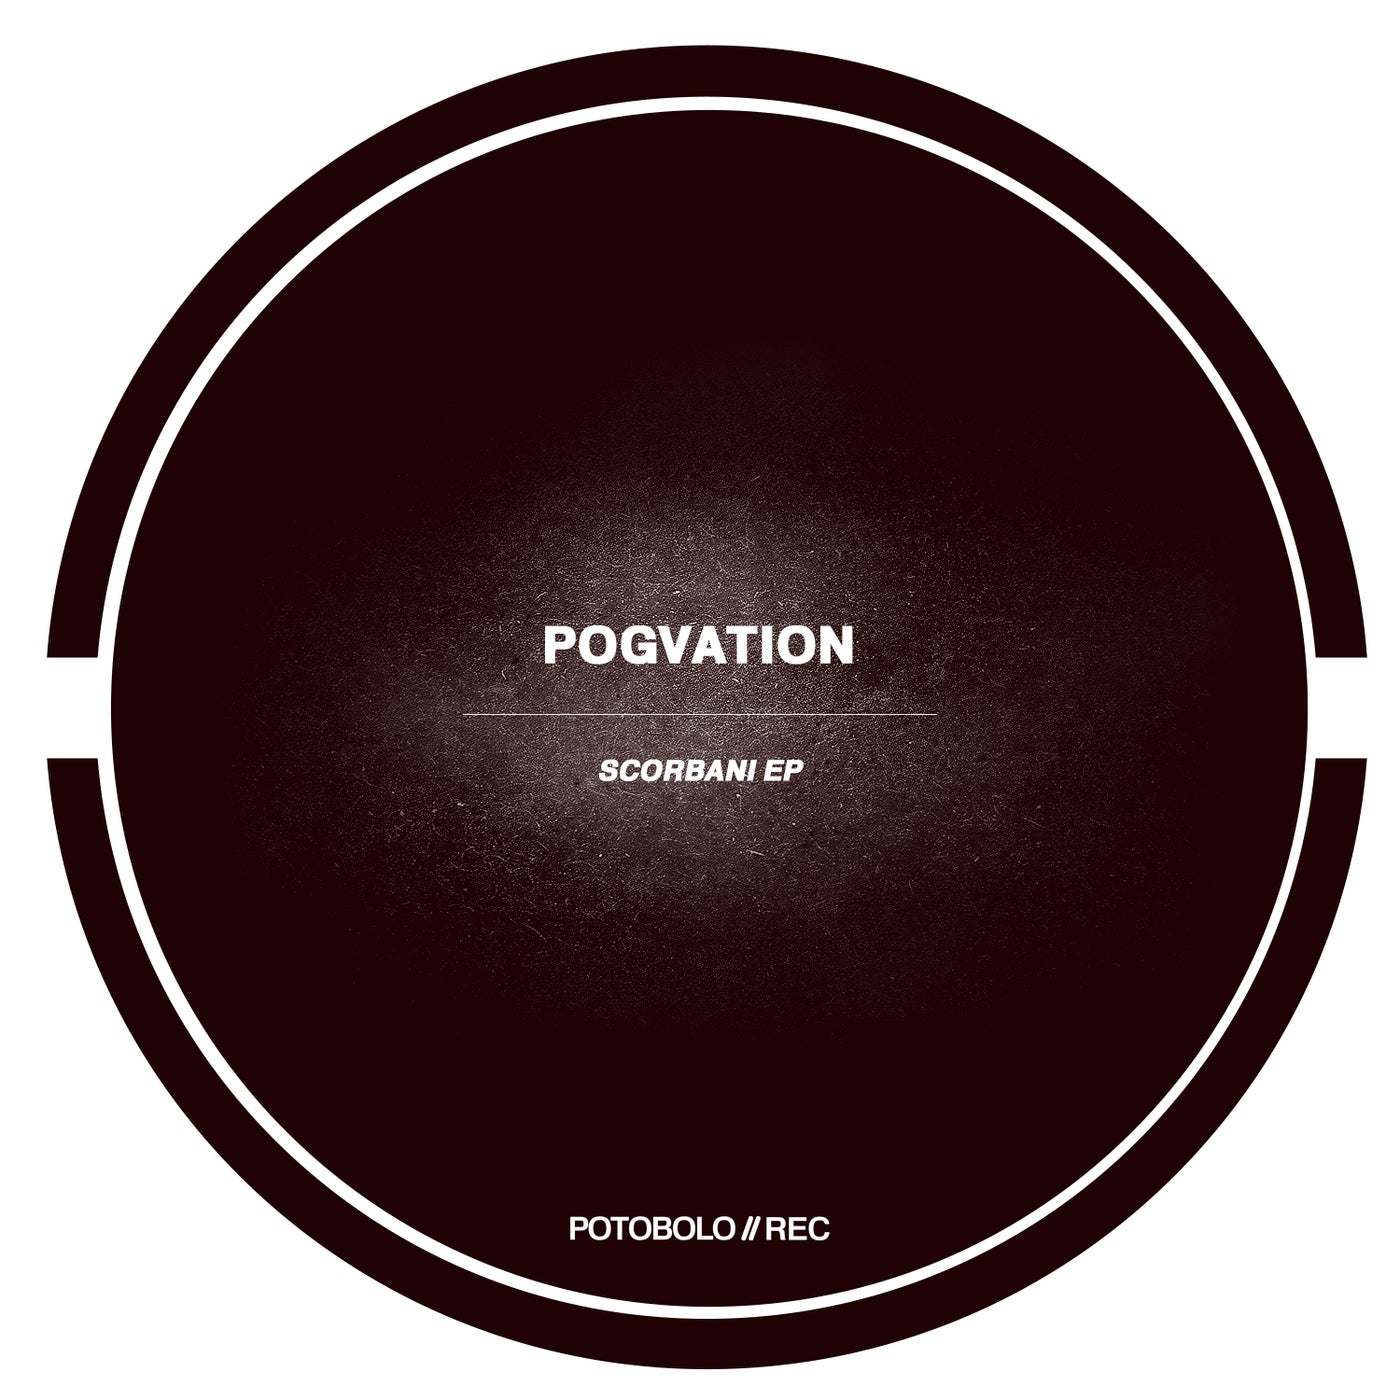 Pogvation - Scorbani EP [PTBL186]